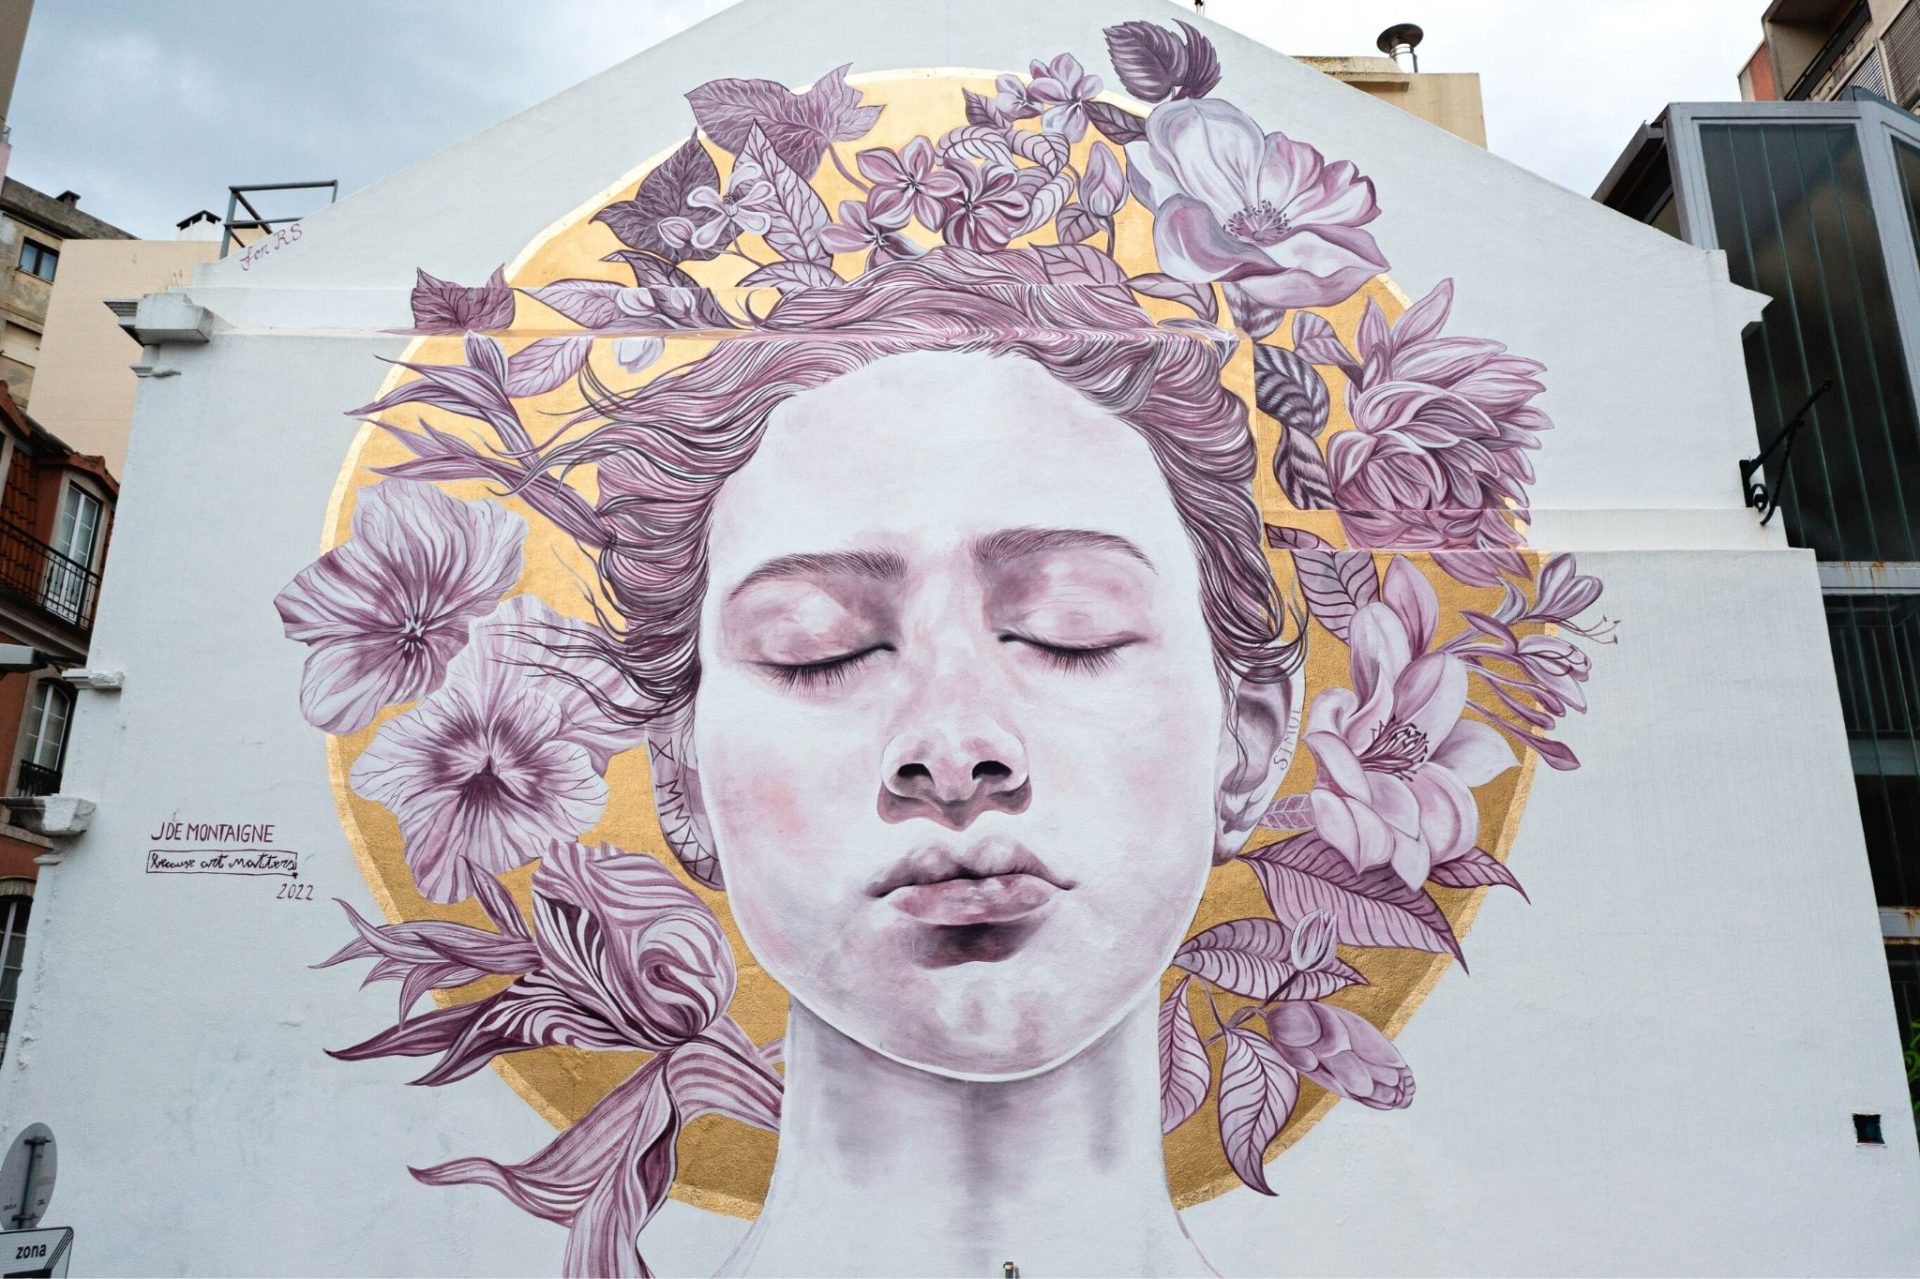 Jacqueline de Montaigne street art mural the language of flowers Because Art Matters